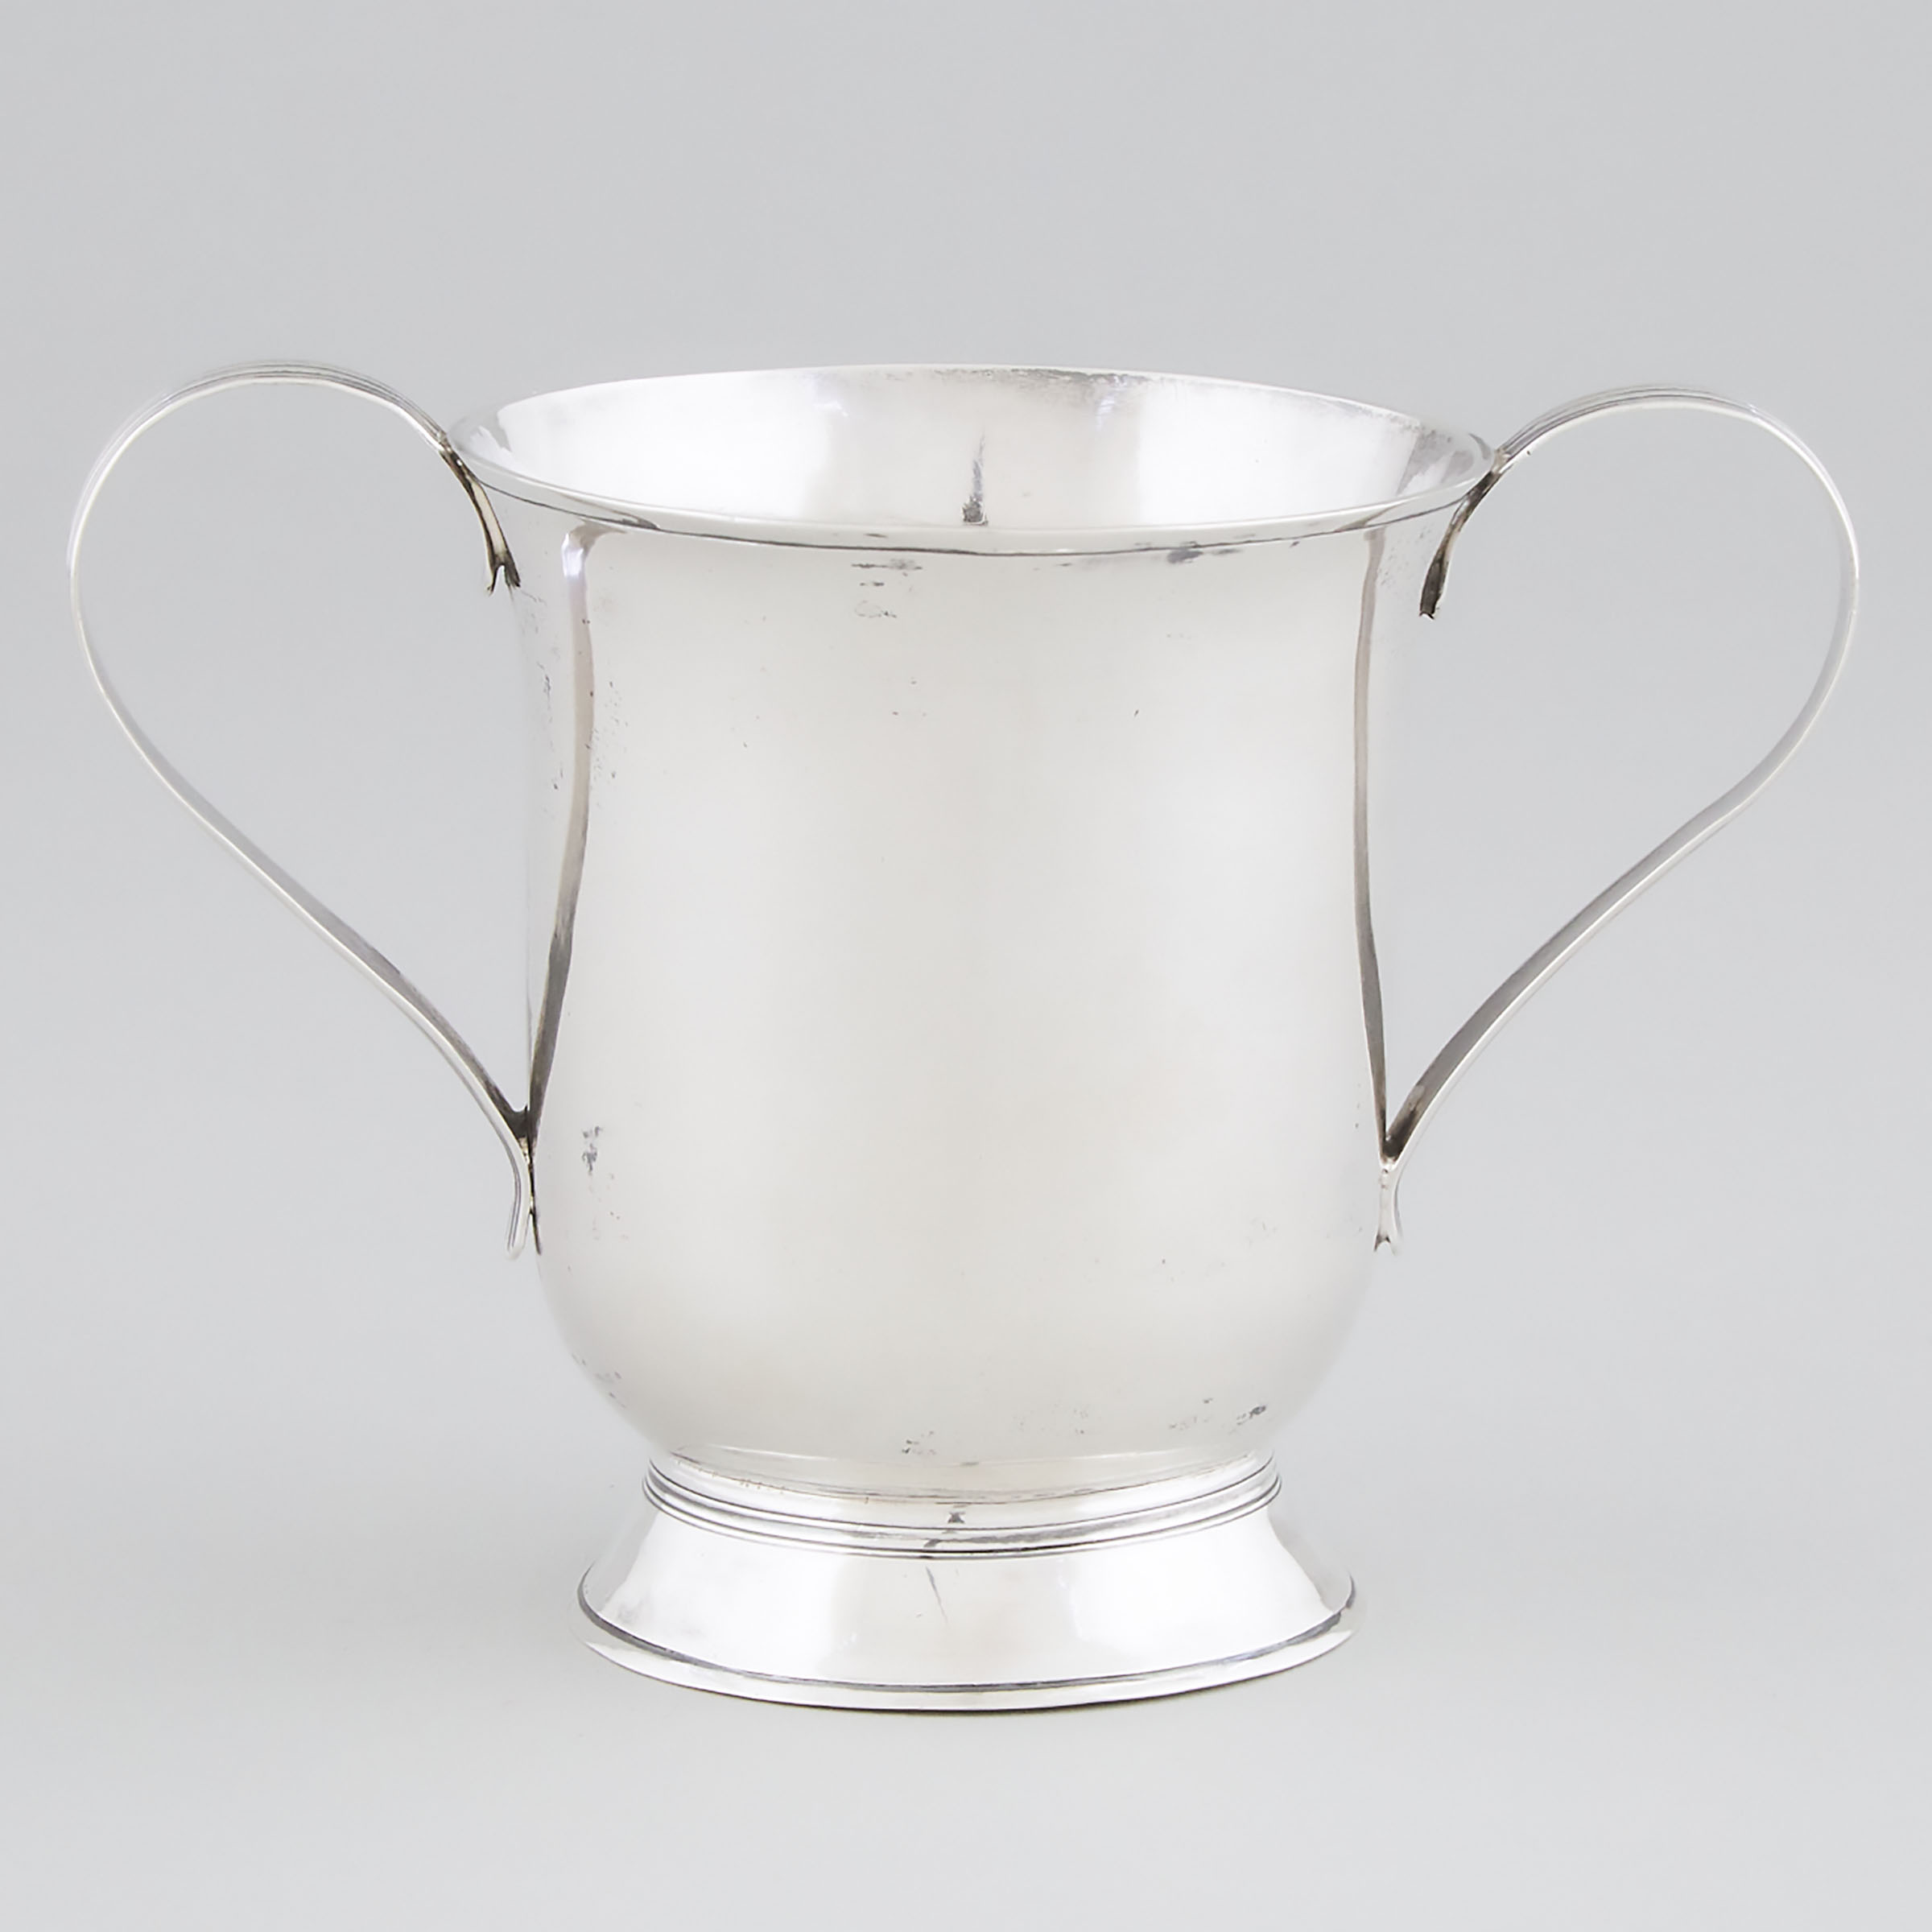 George III Silver Two-Handled Cup, Hester Bateman, London, 1790